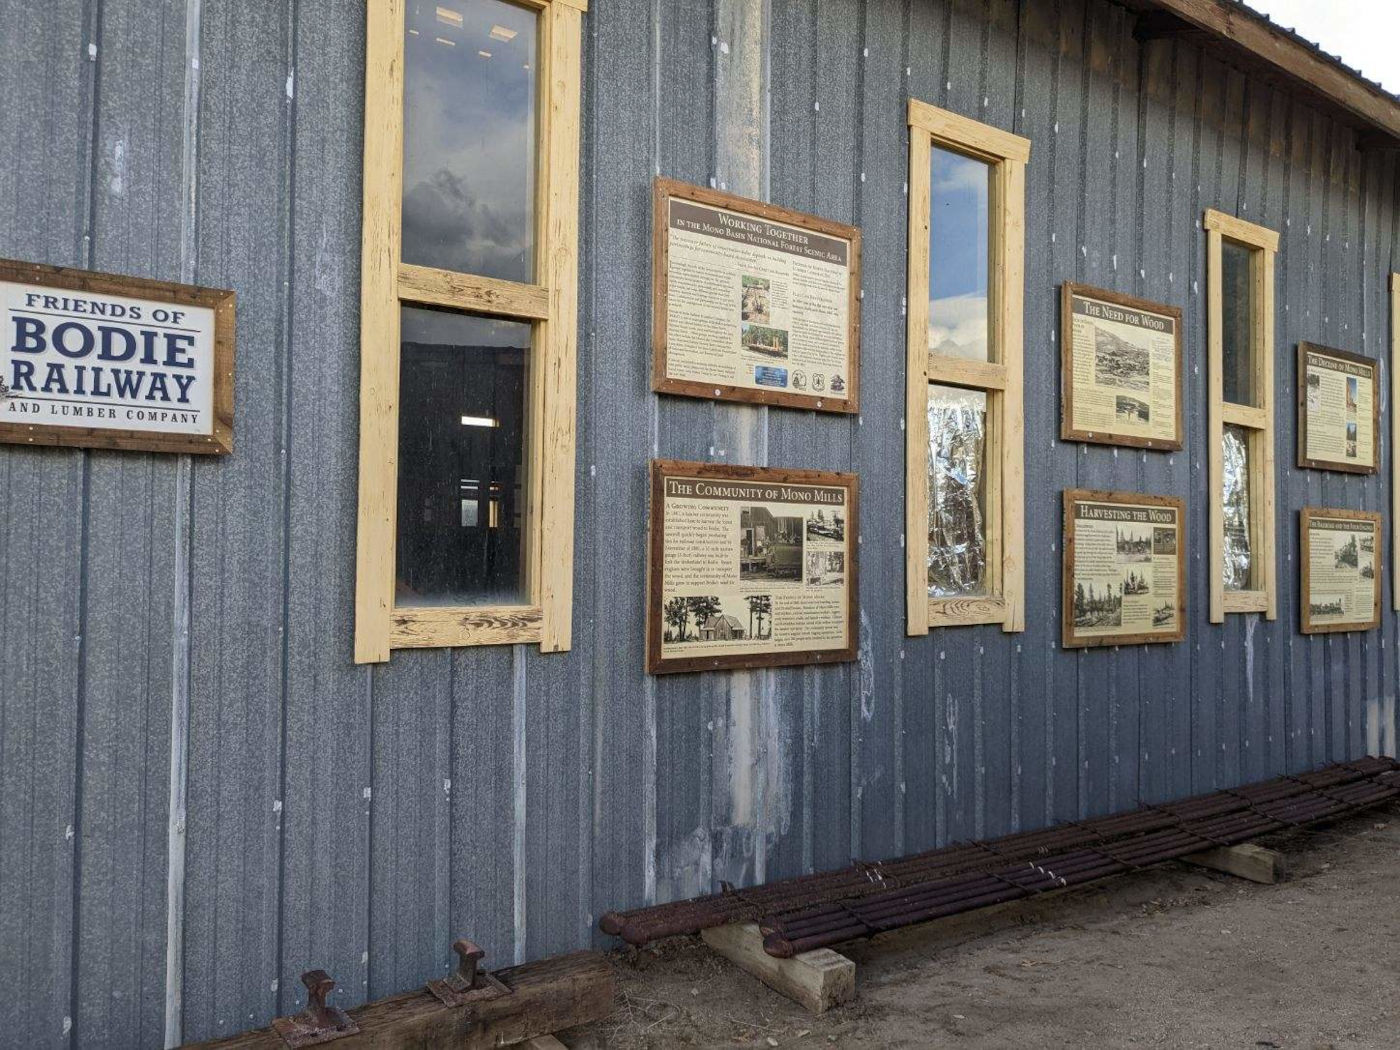 Bodie railroad exhibit